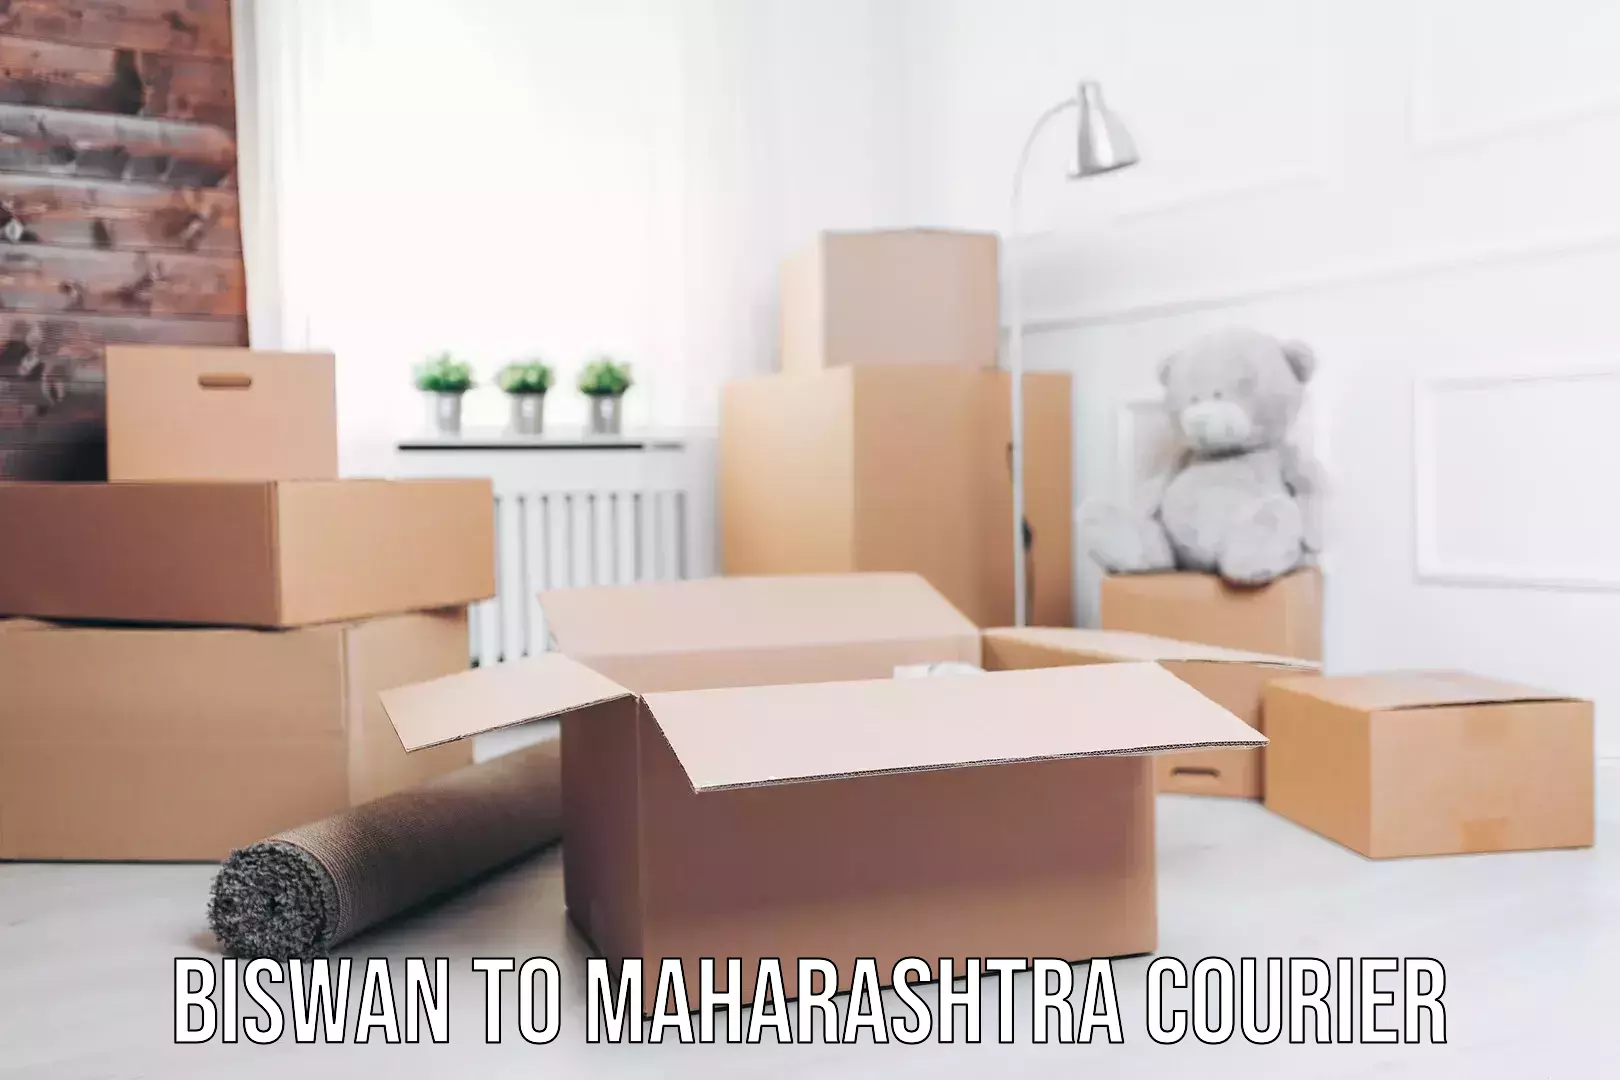 Efficient order fulfillment Biswan to Maharashtra